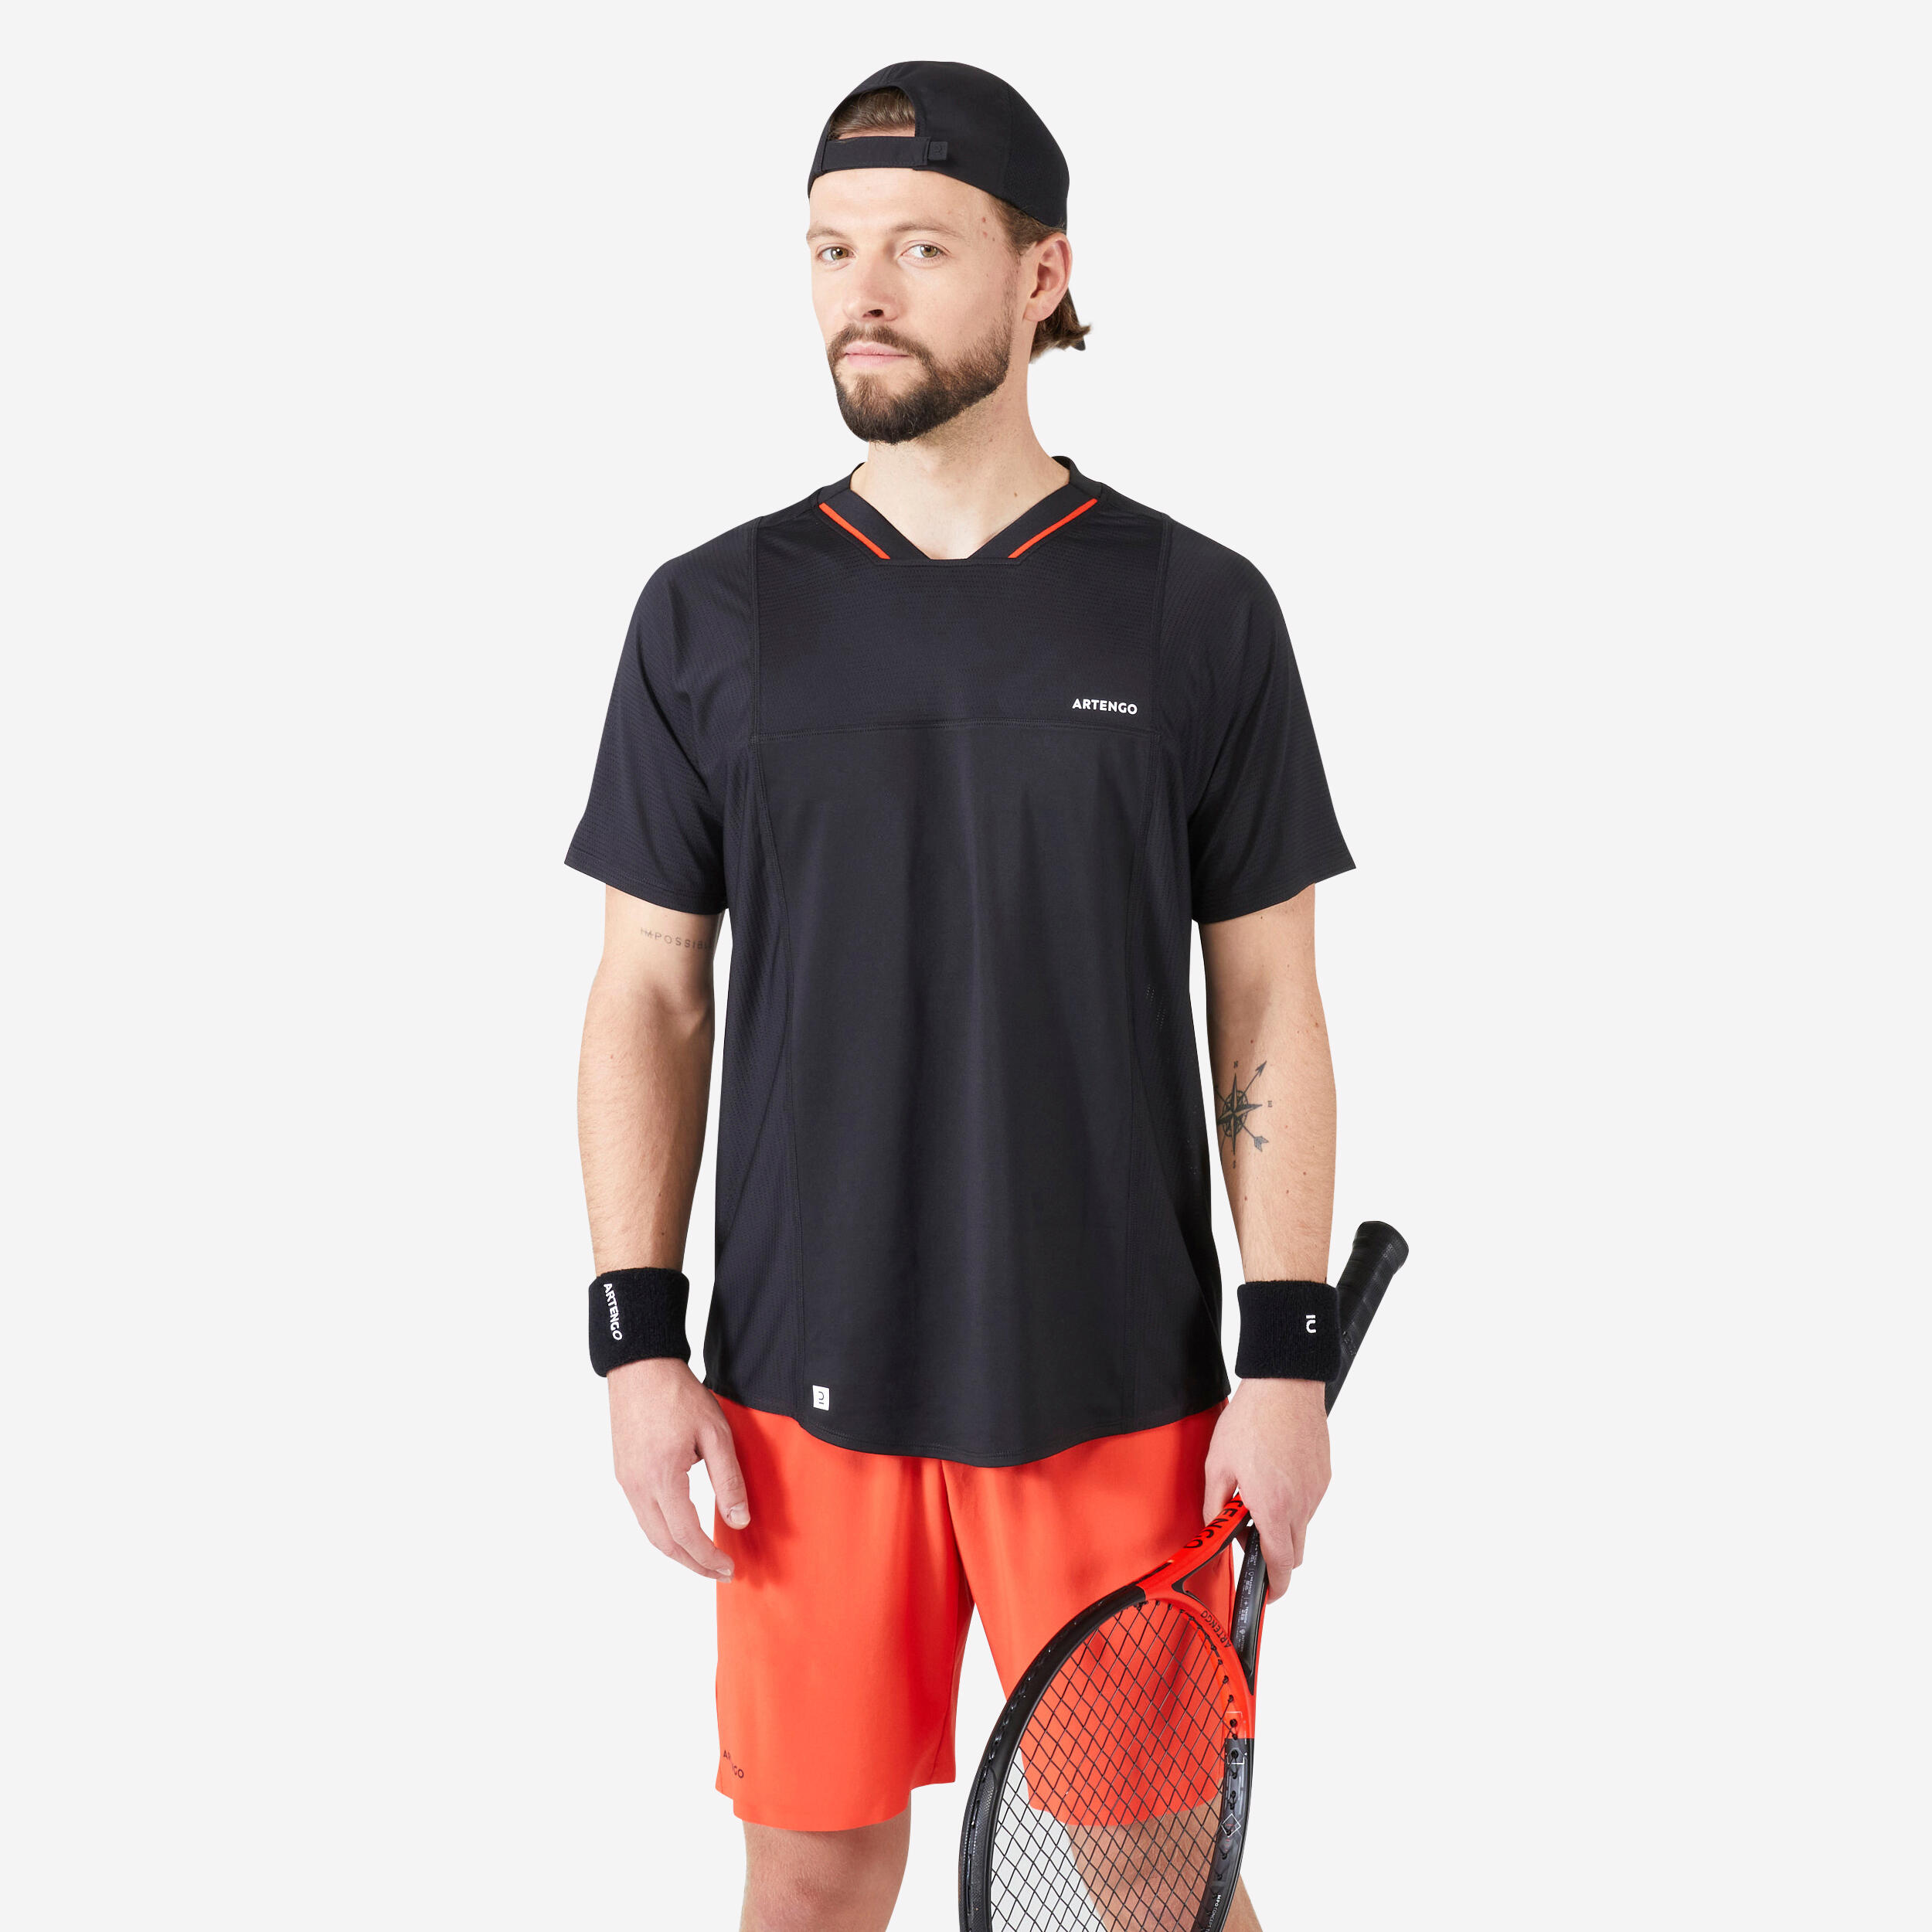 ARTENGO Men's Tennis Short-Sleeved T-Shirt Dry VN - Black/Red